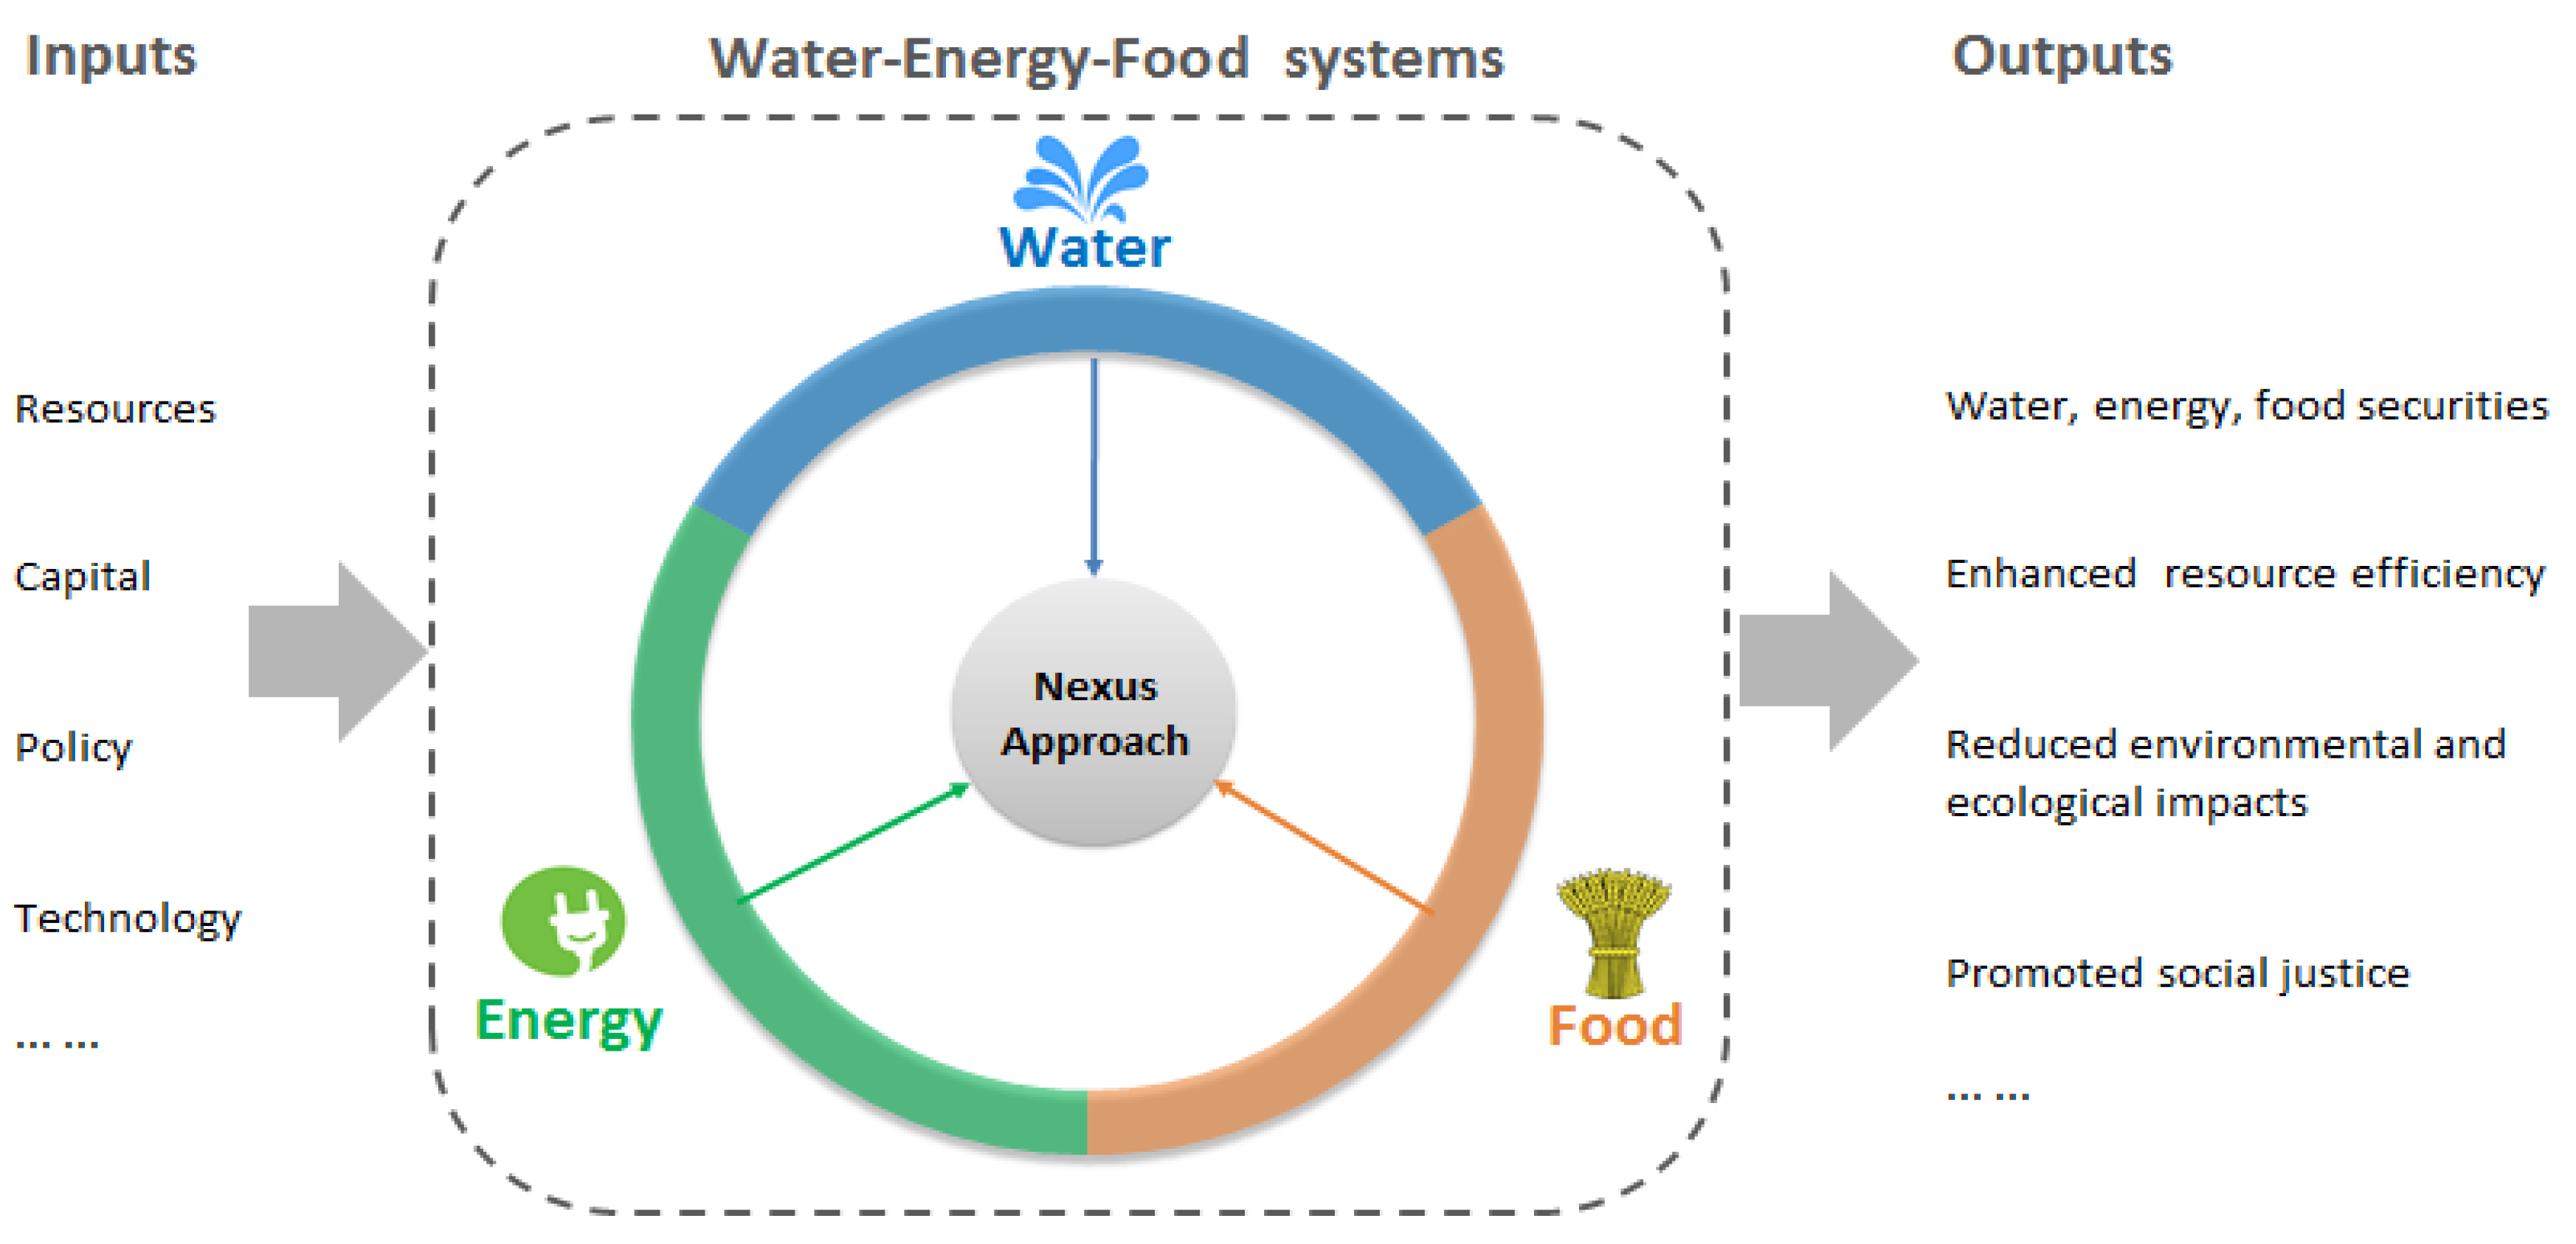 III. The Importance of Green Energy in the Water-Energy-Food Nexus